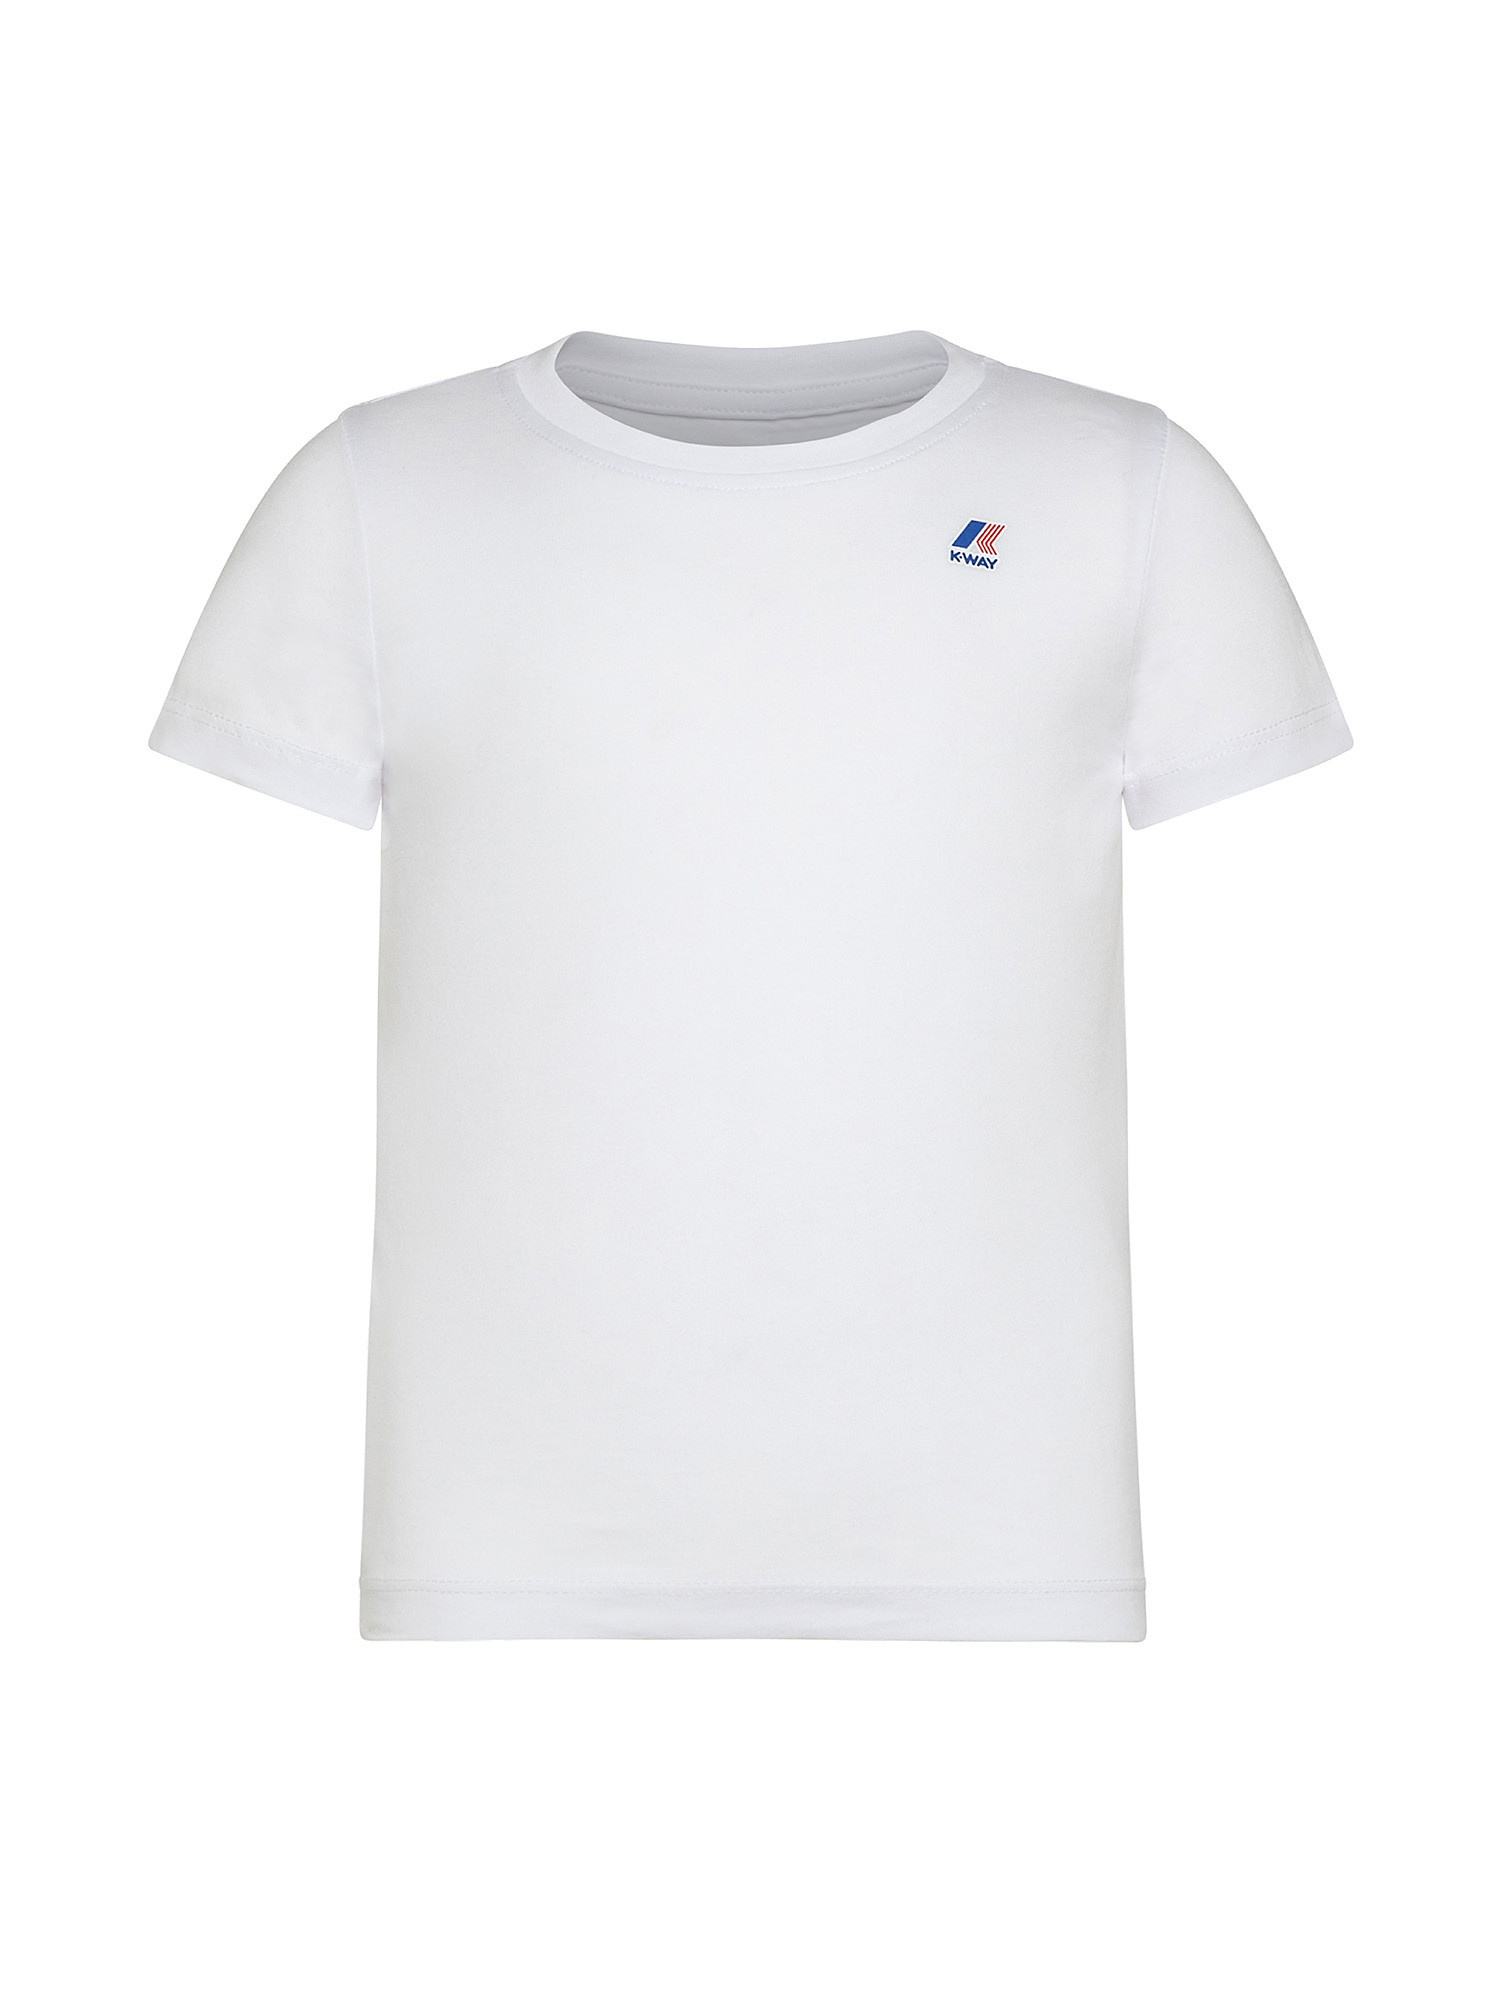 Regular fit boy's T-shirt, White, large image number 0